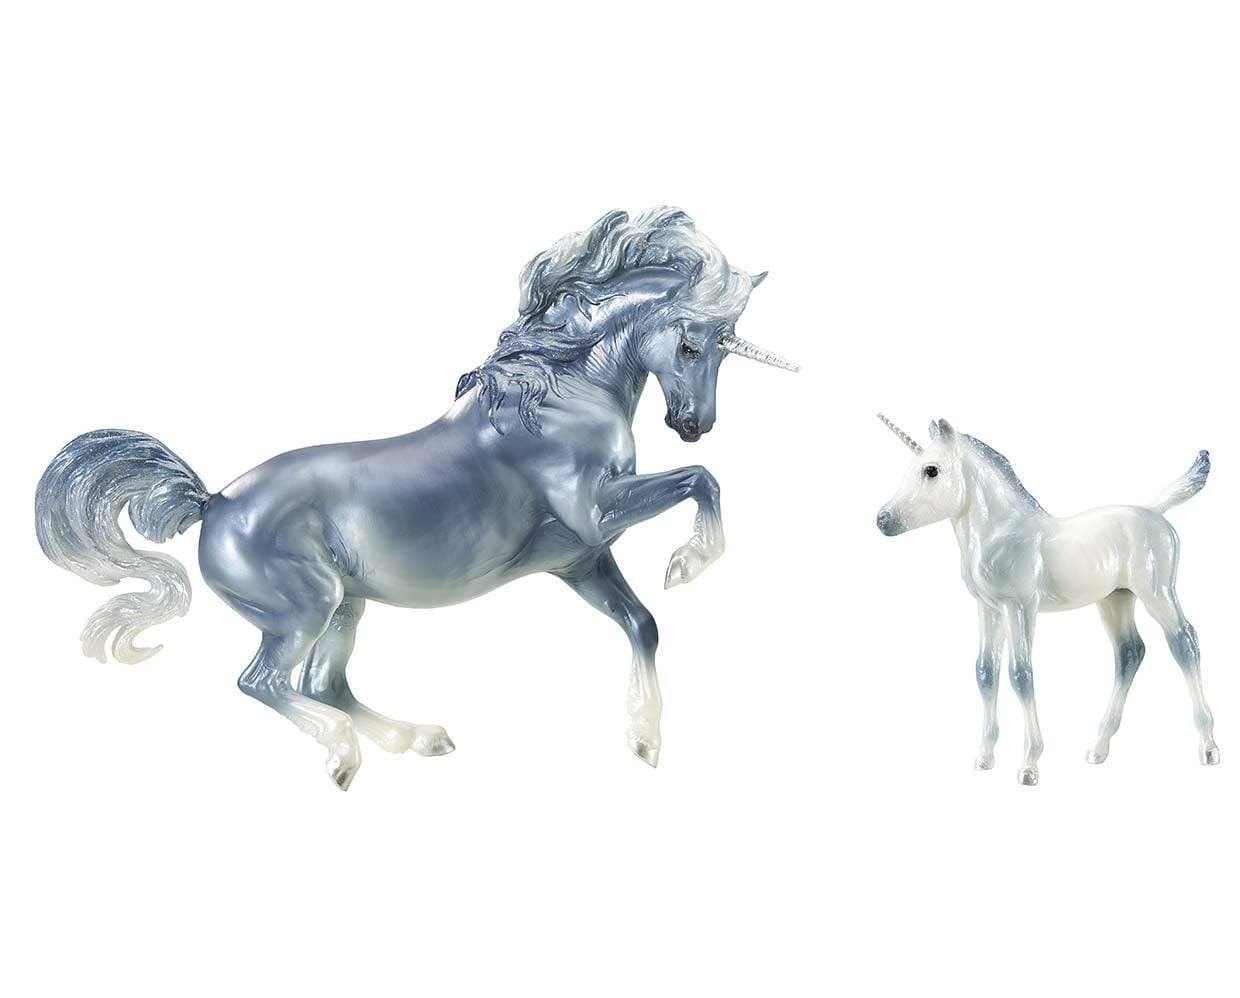 breyer horse toys